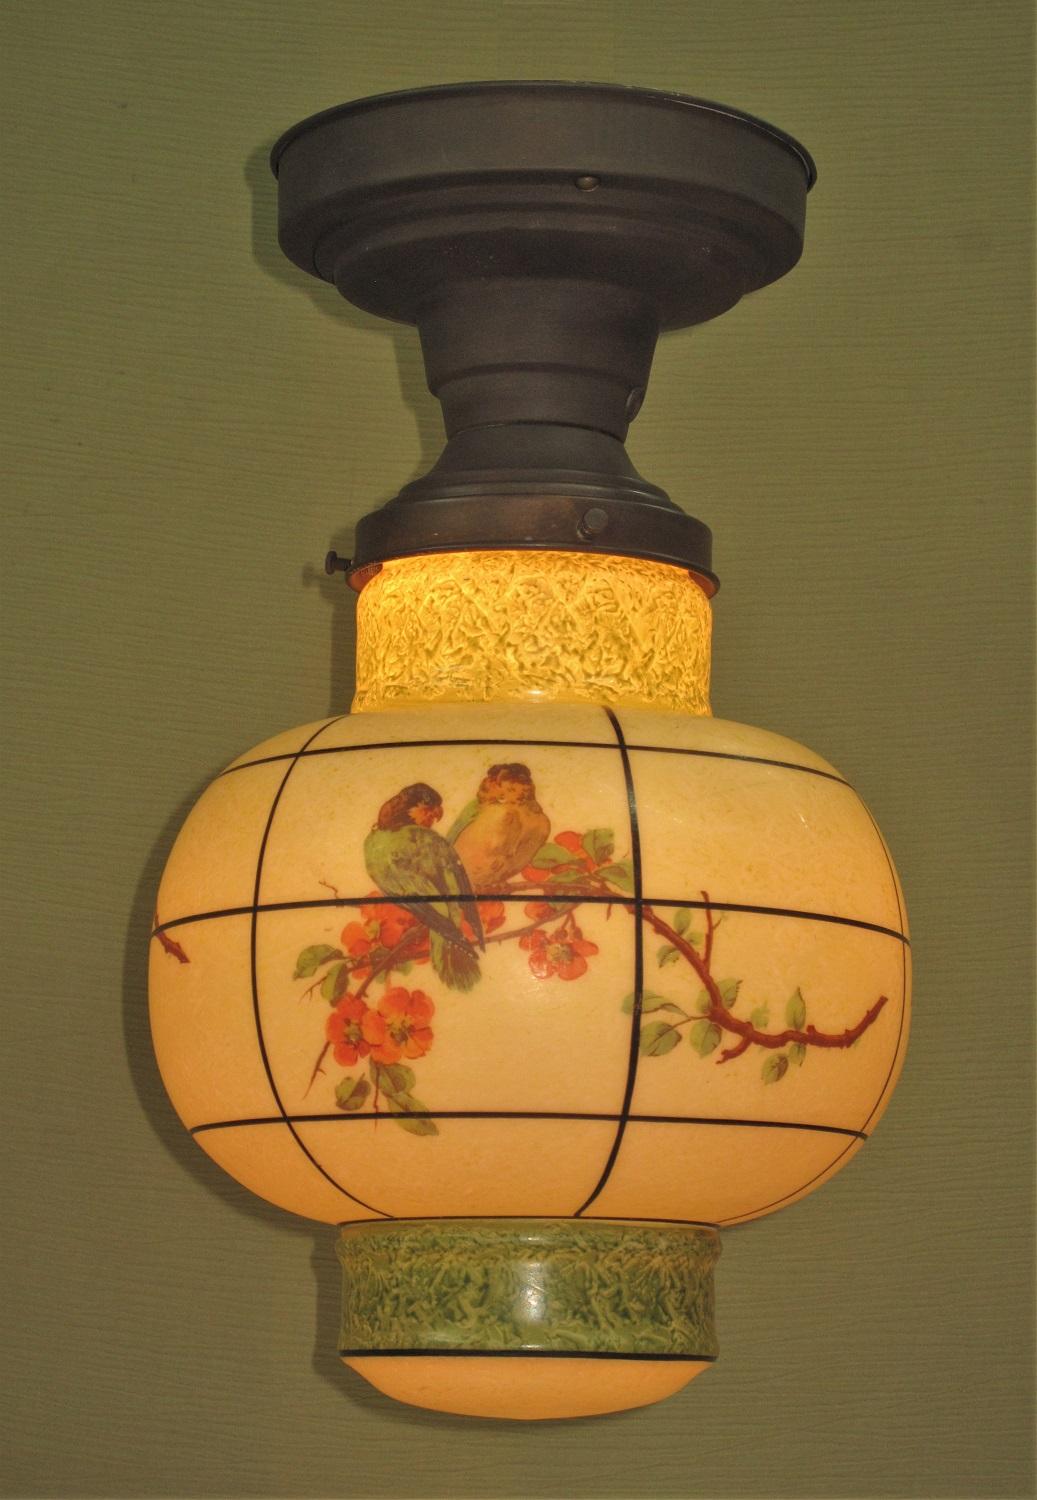 Fired Asian Lantern Inspired Parrot Fixture, circa 1930